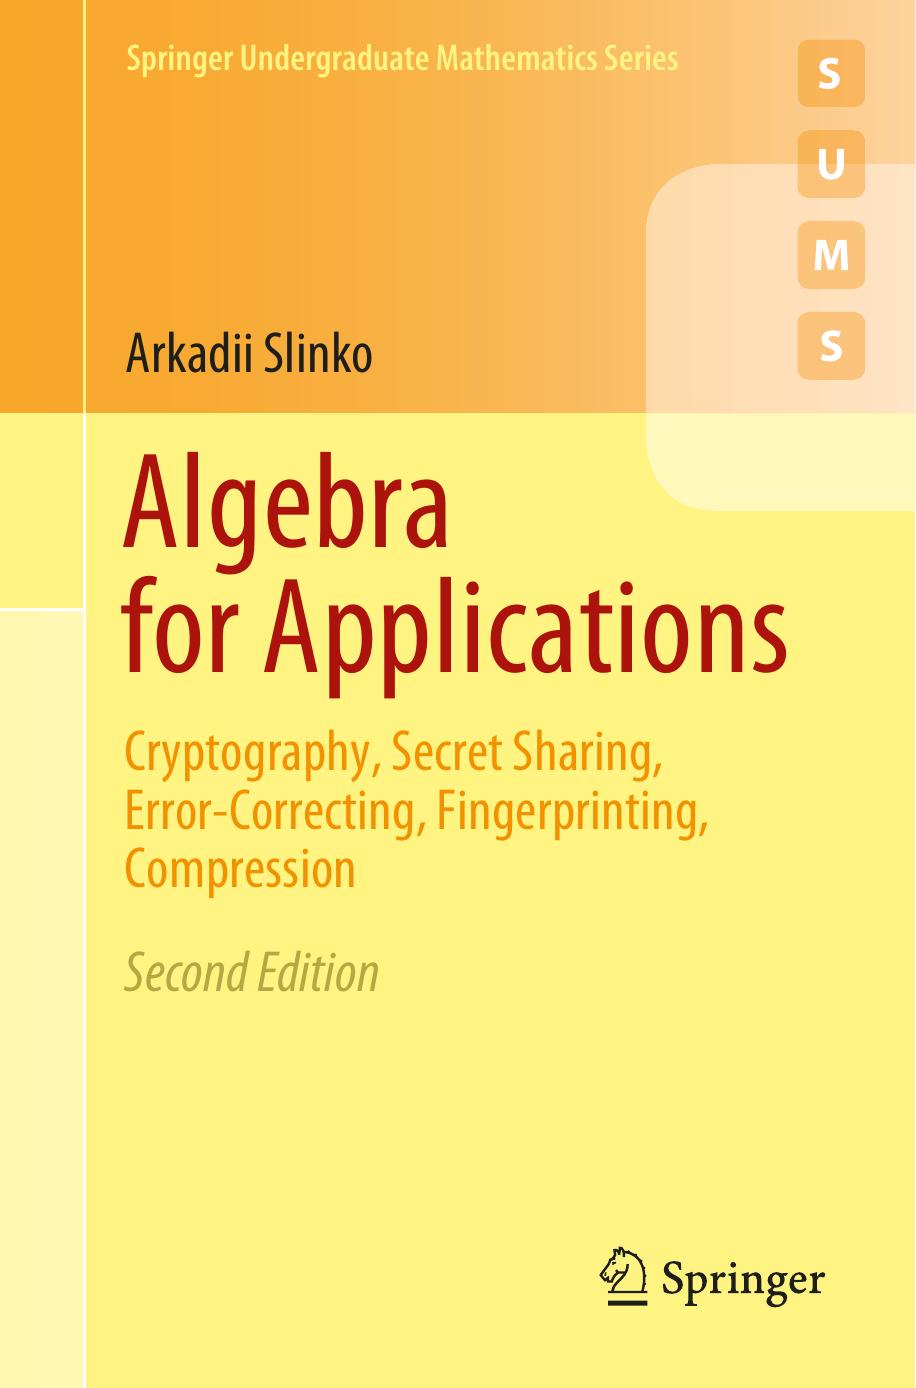 Algebra for Applications by Arkadii Slinko